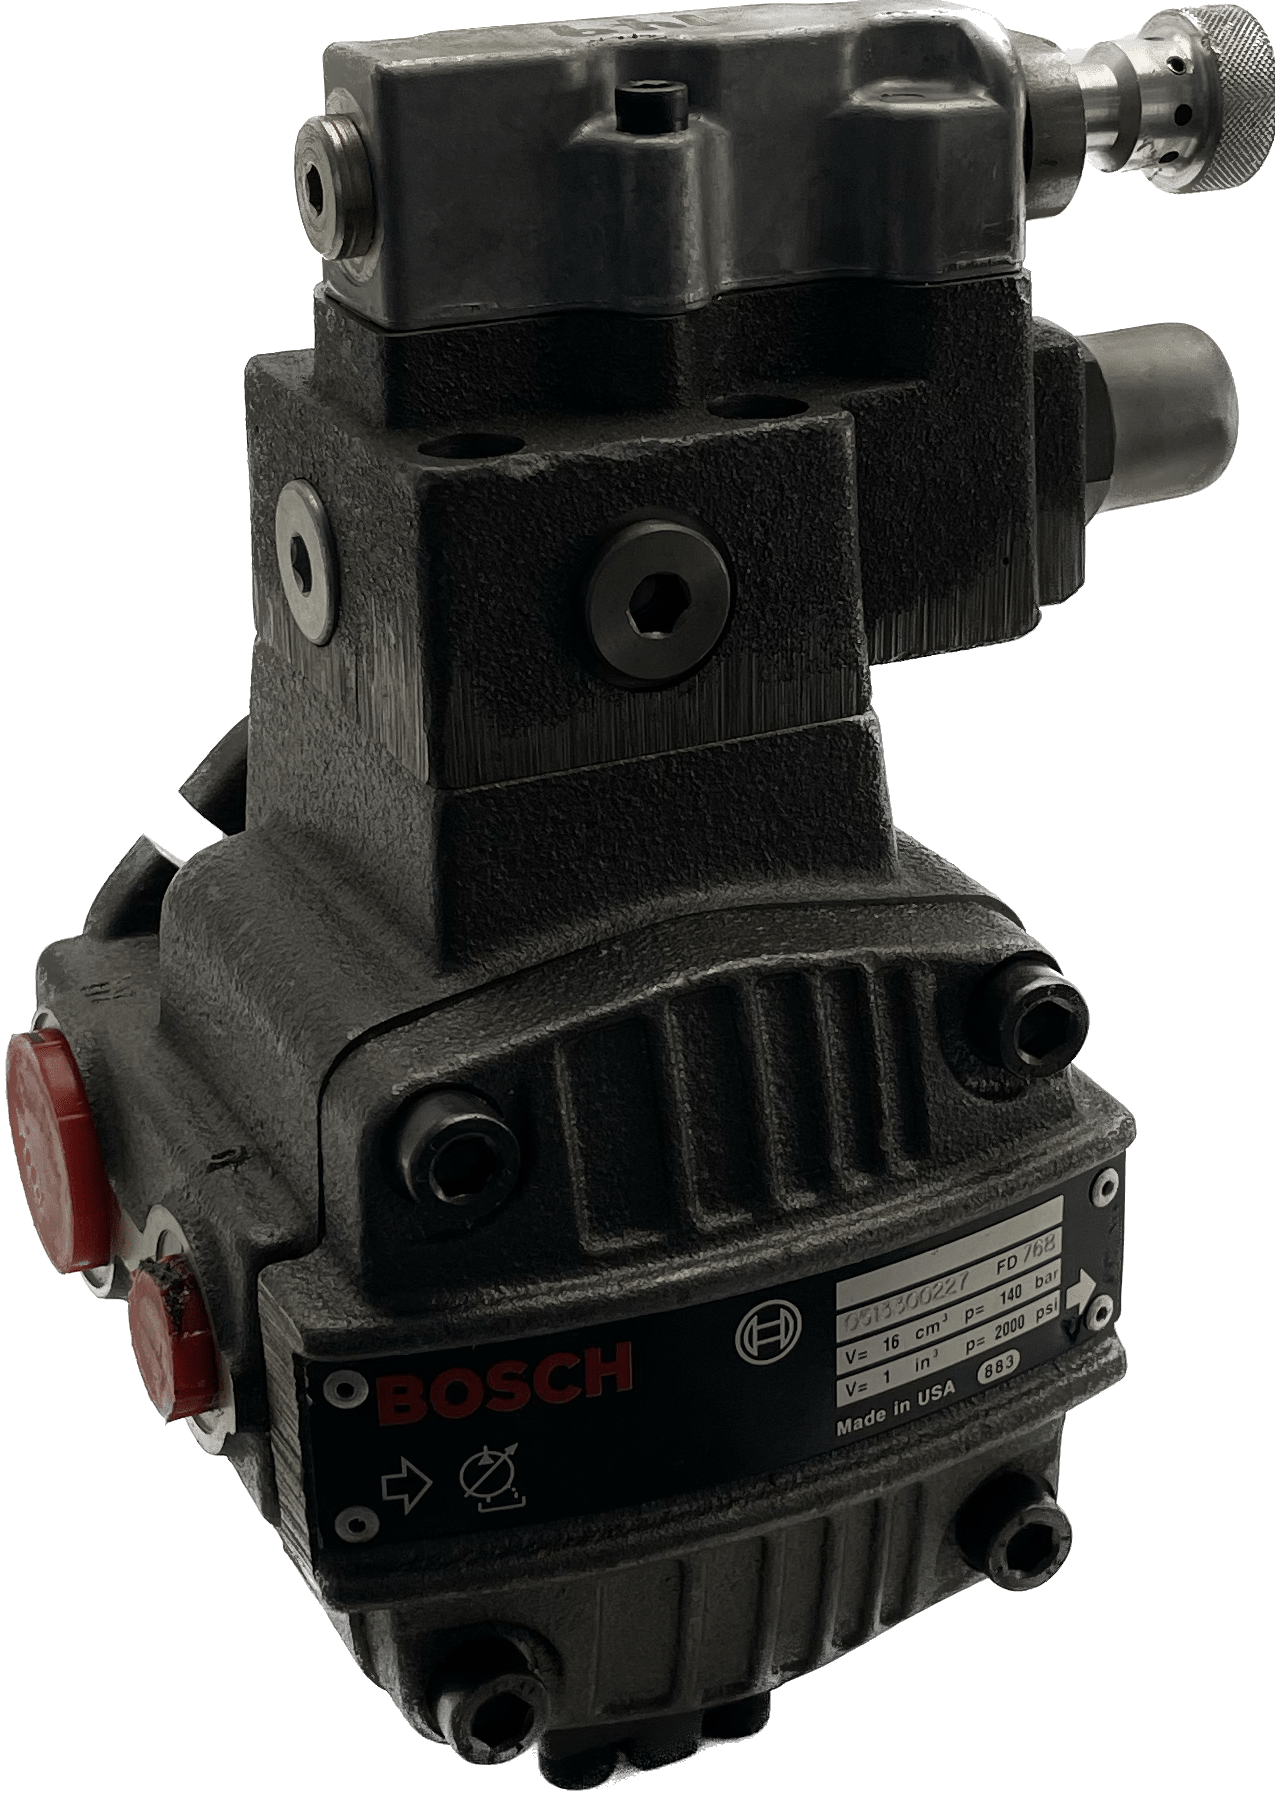 Bosch 0513R15A7VPV16SM14HZB03 - #product_category# | Klenk Maschinenhandel